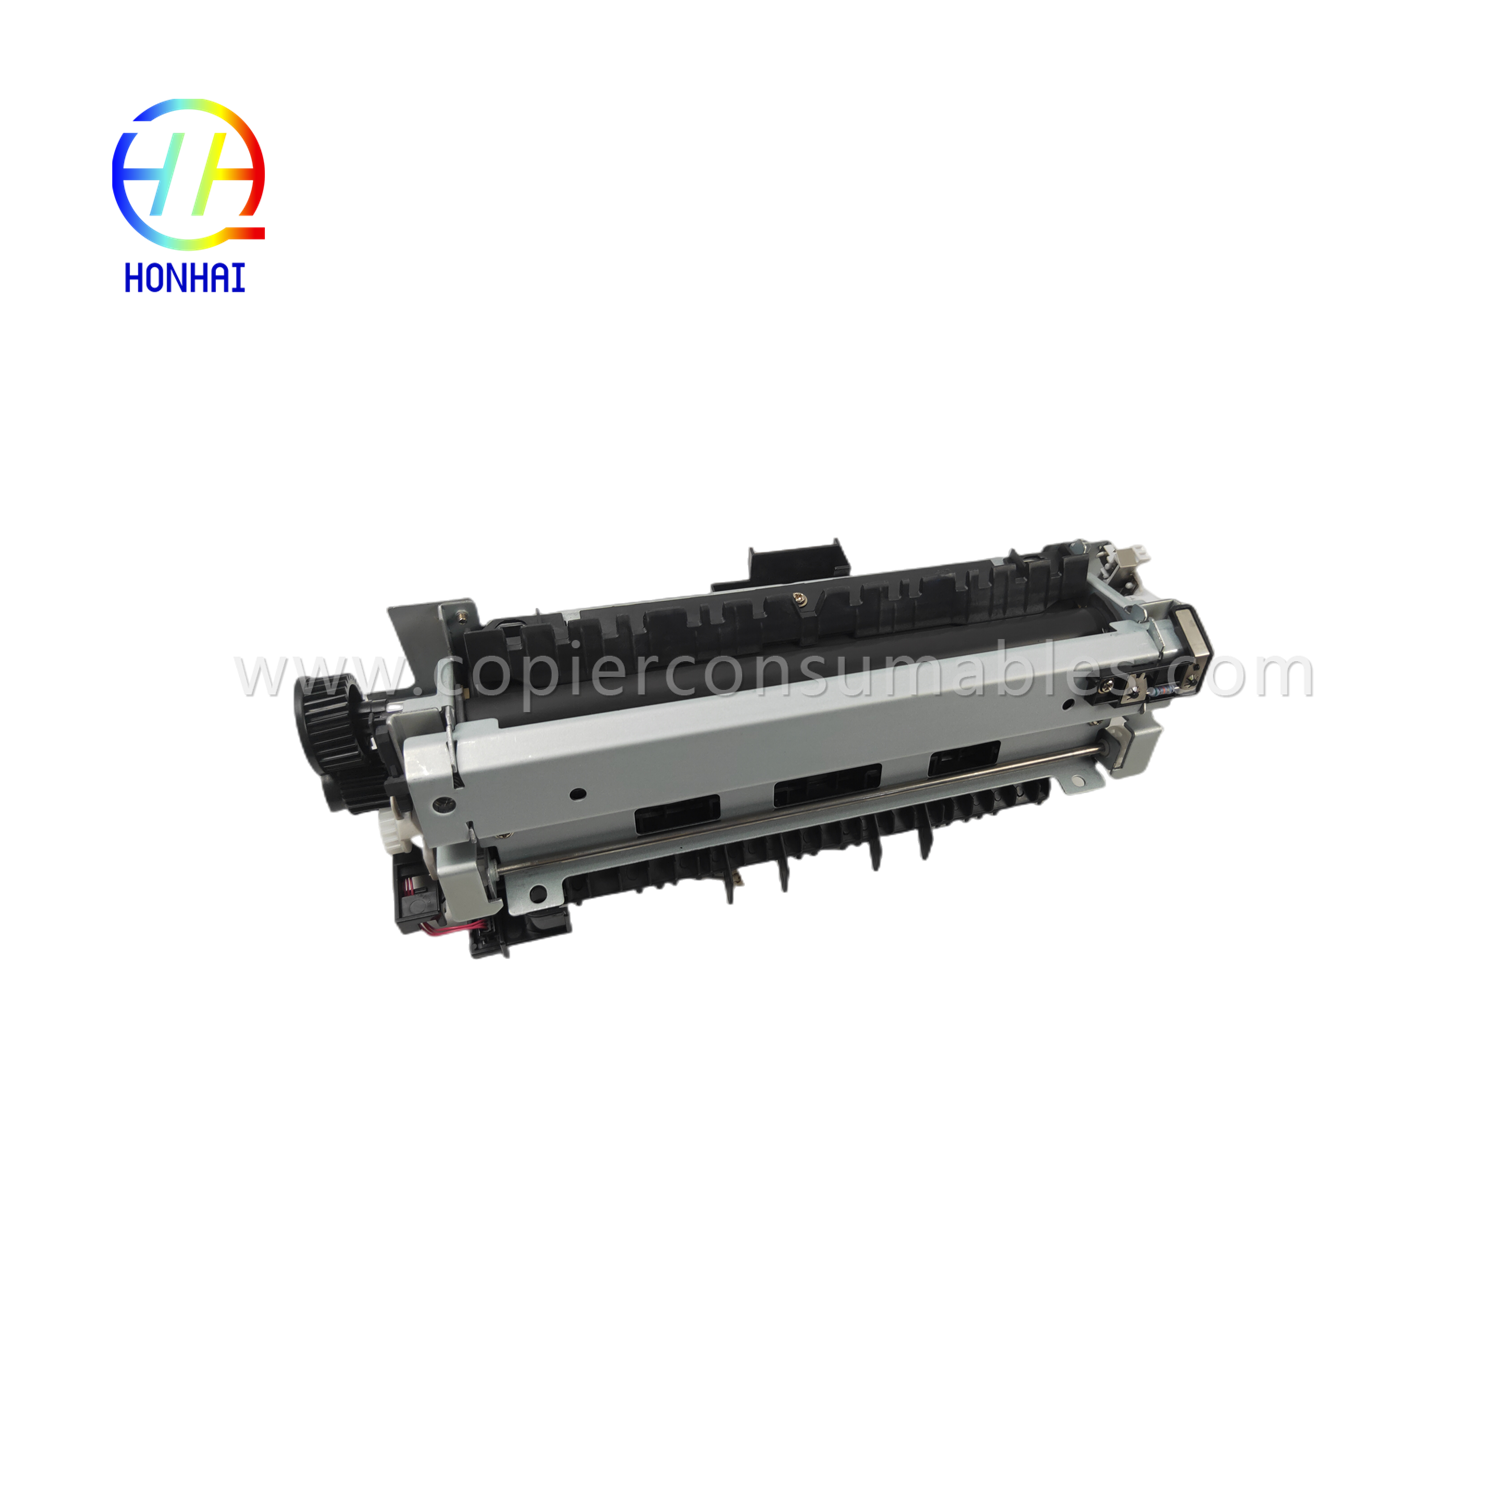 https://c585.goodao.net/fuser-assemble-220v-japan-for-hp-521-525-m521-m525-rm1-8508-rm1-8508-000-fuser-unit-product/